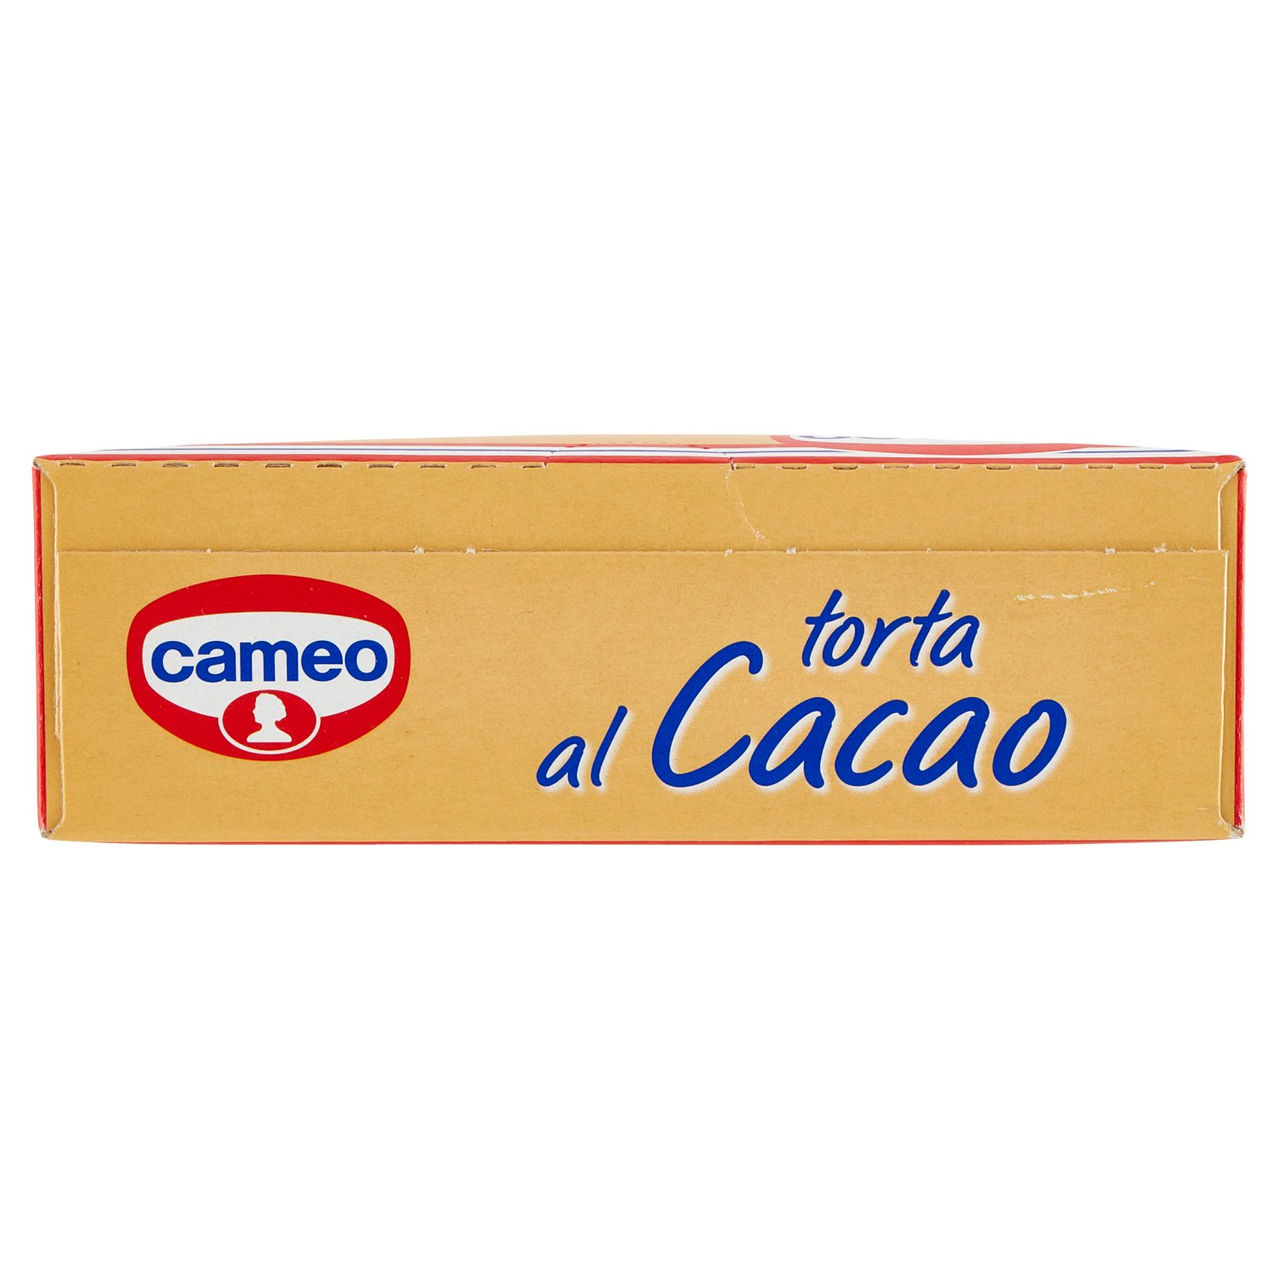 Torta al Cacao Cameo 448 g in vendita online